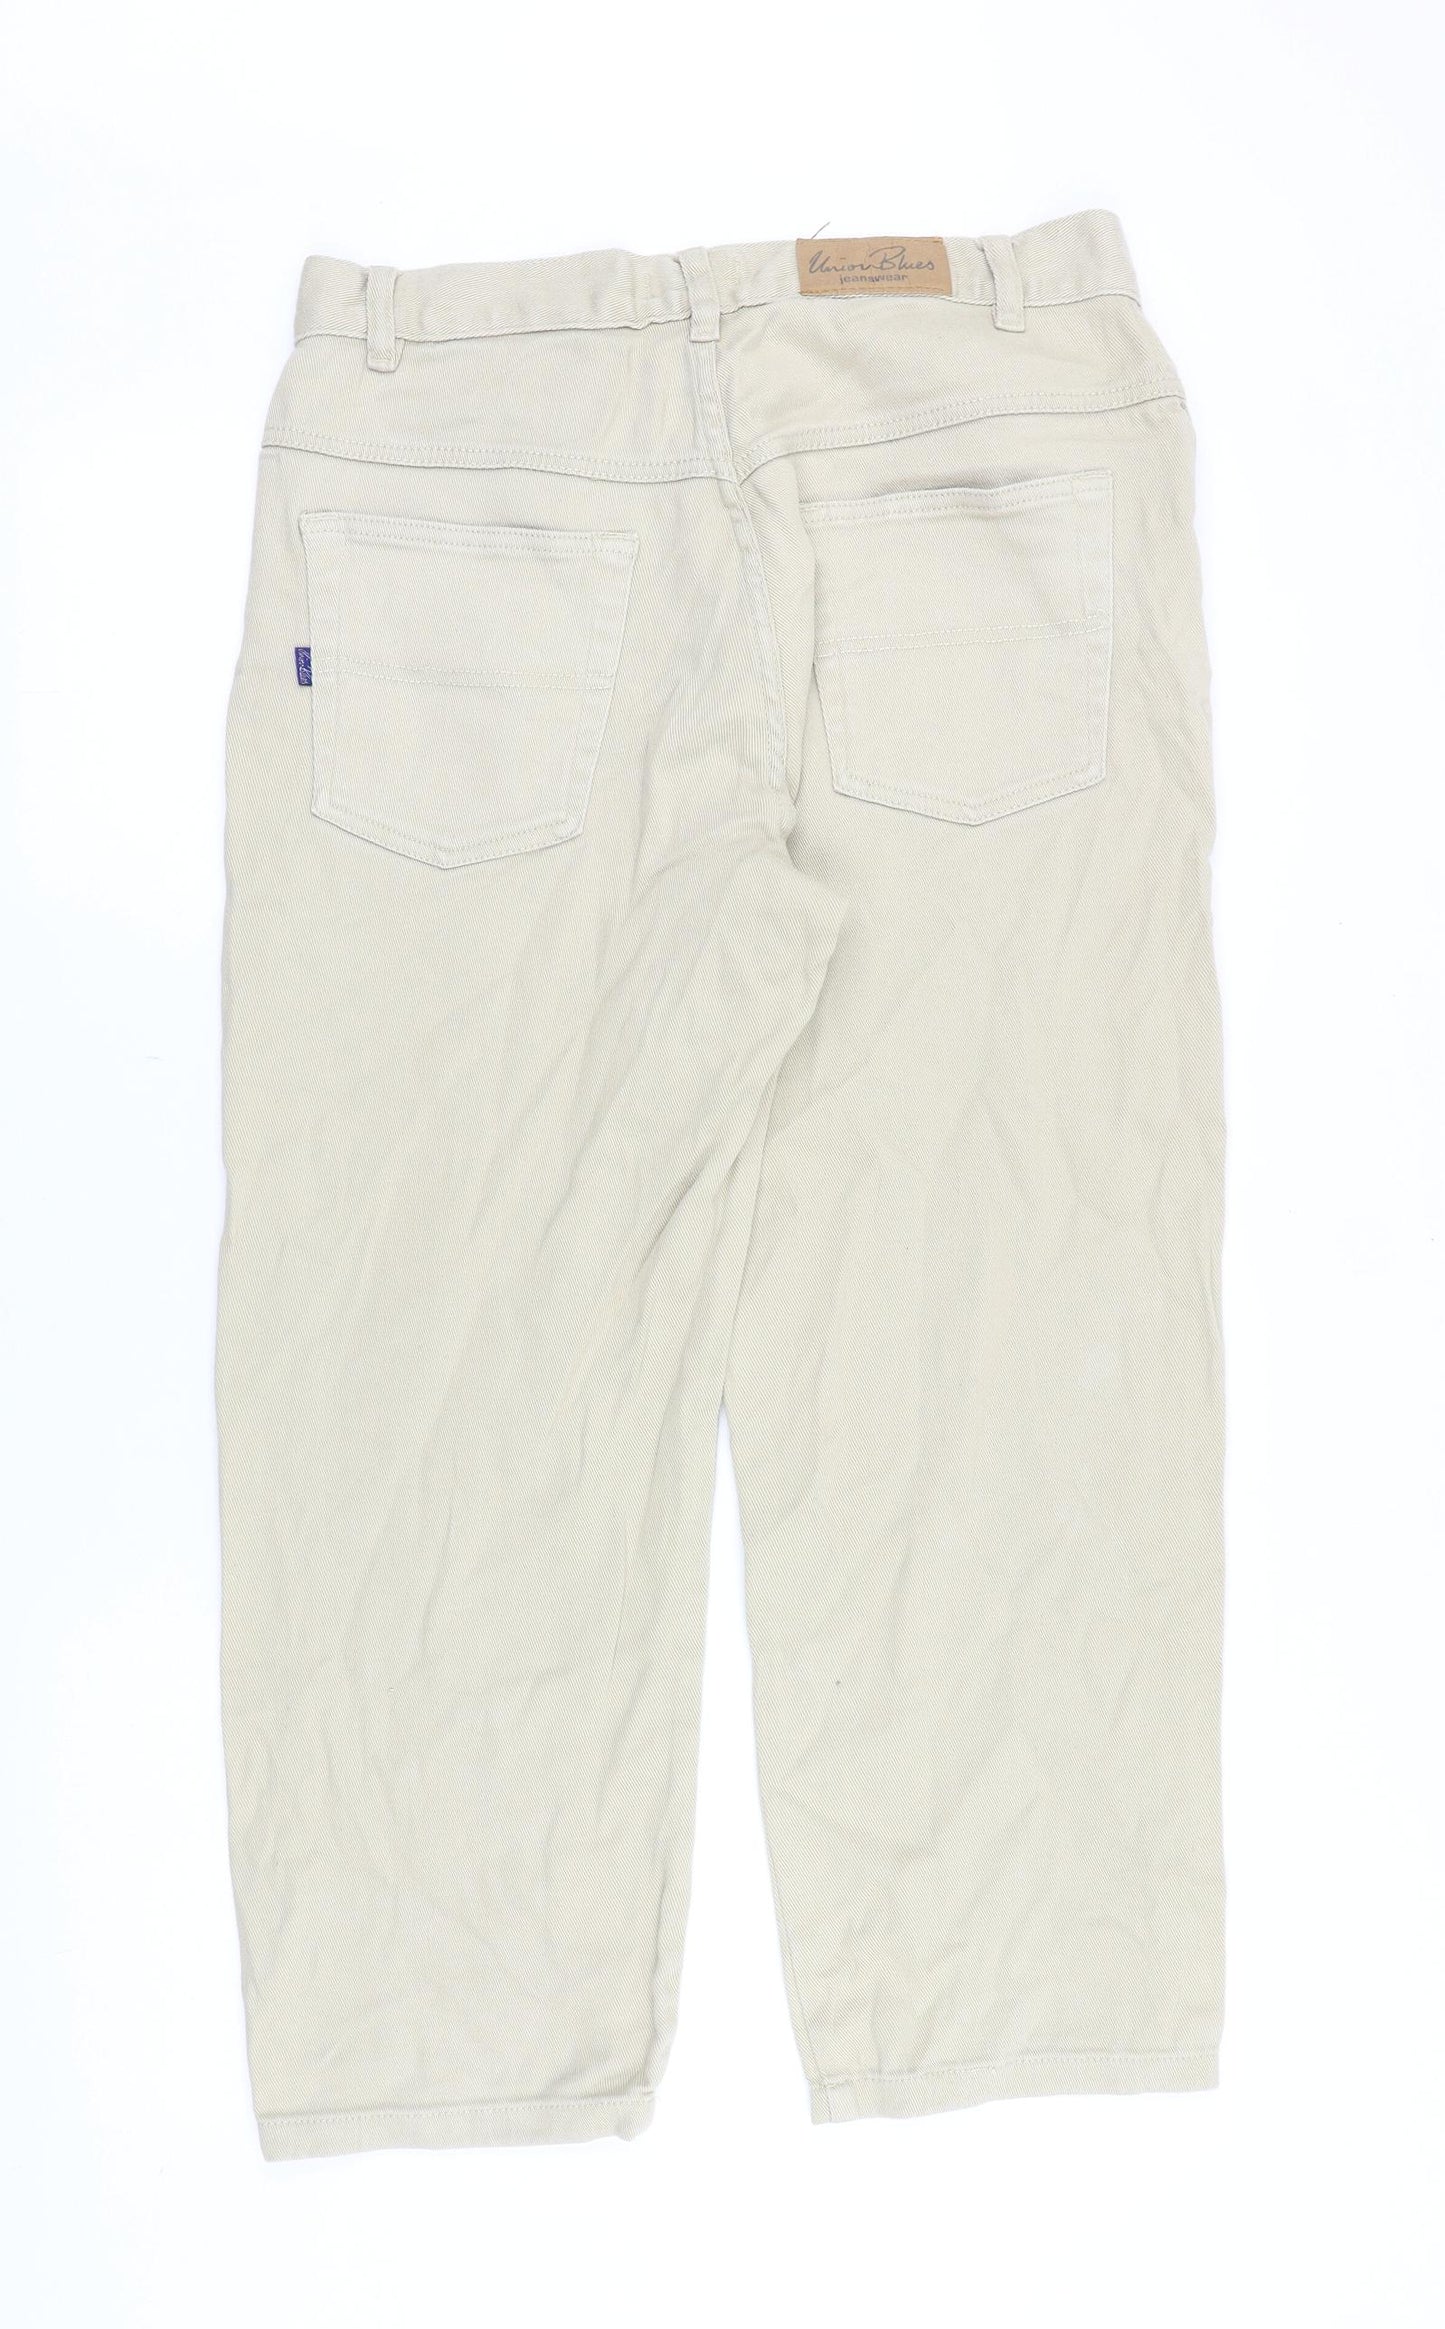 Union Blues Mens Beige Cotton Straight Jeans Size 34 in Regular Zip